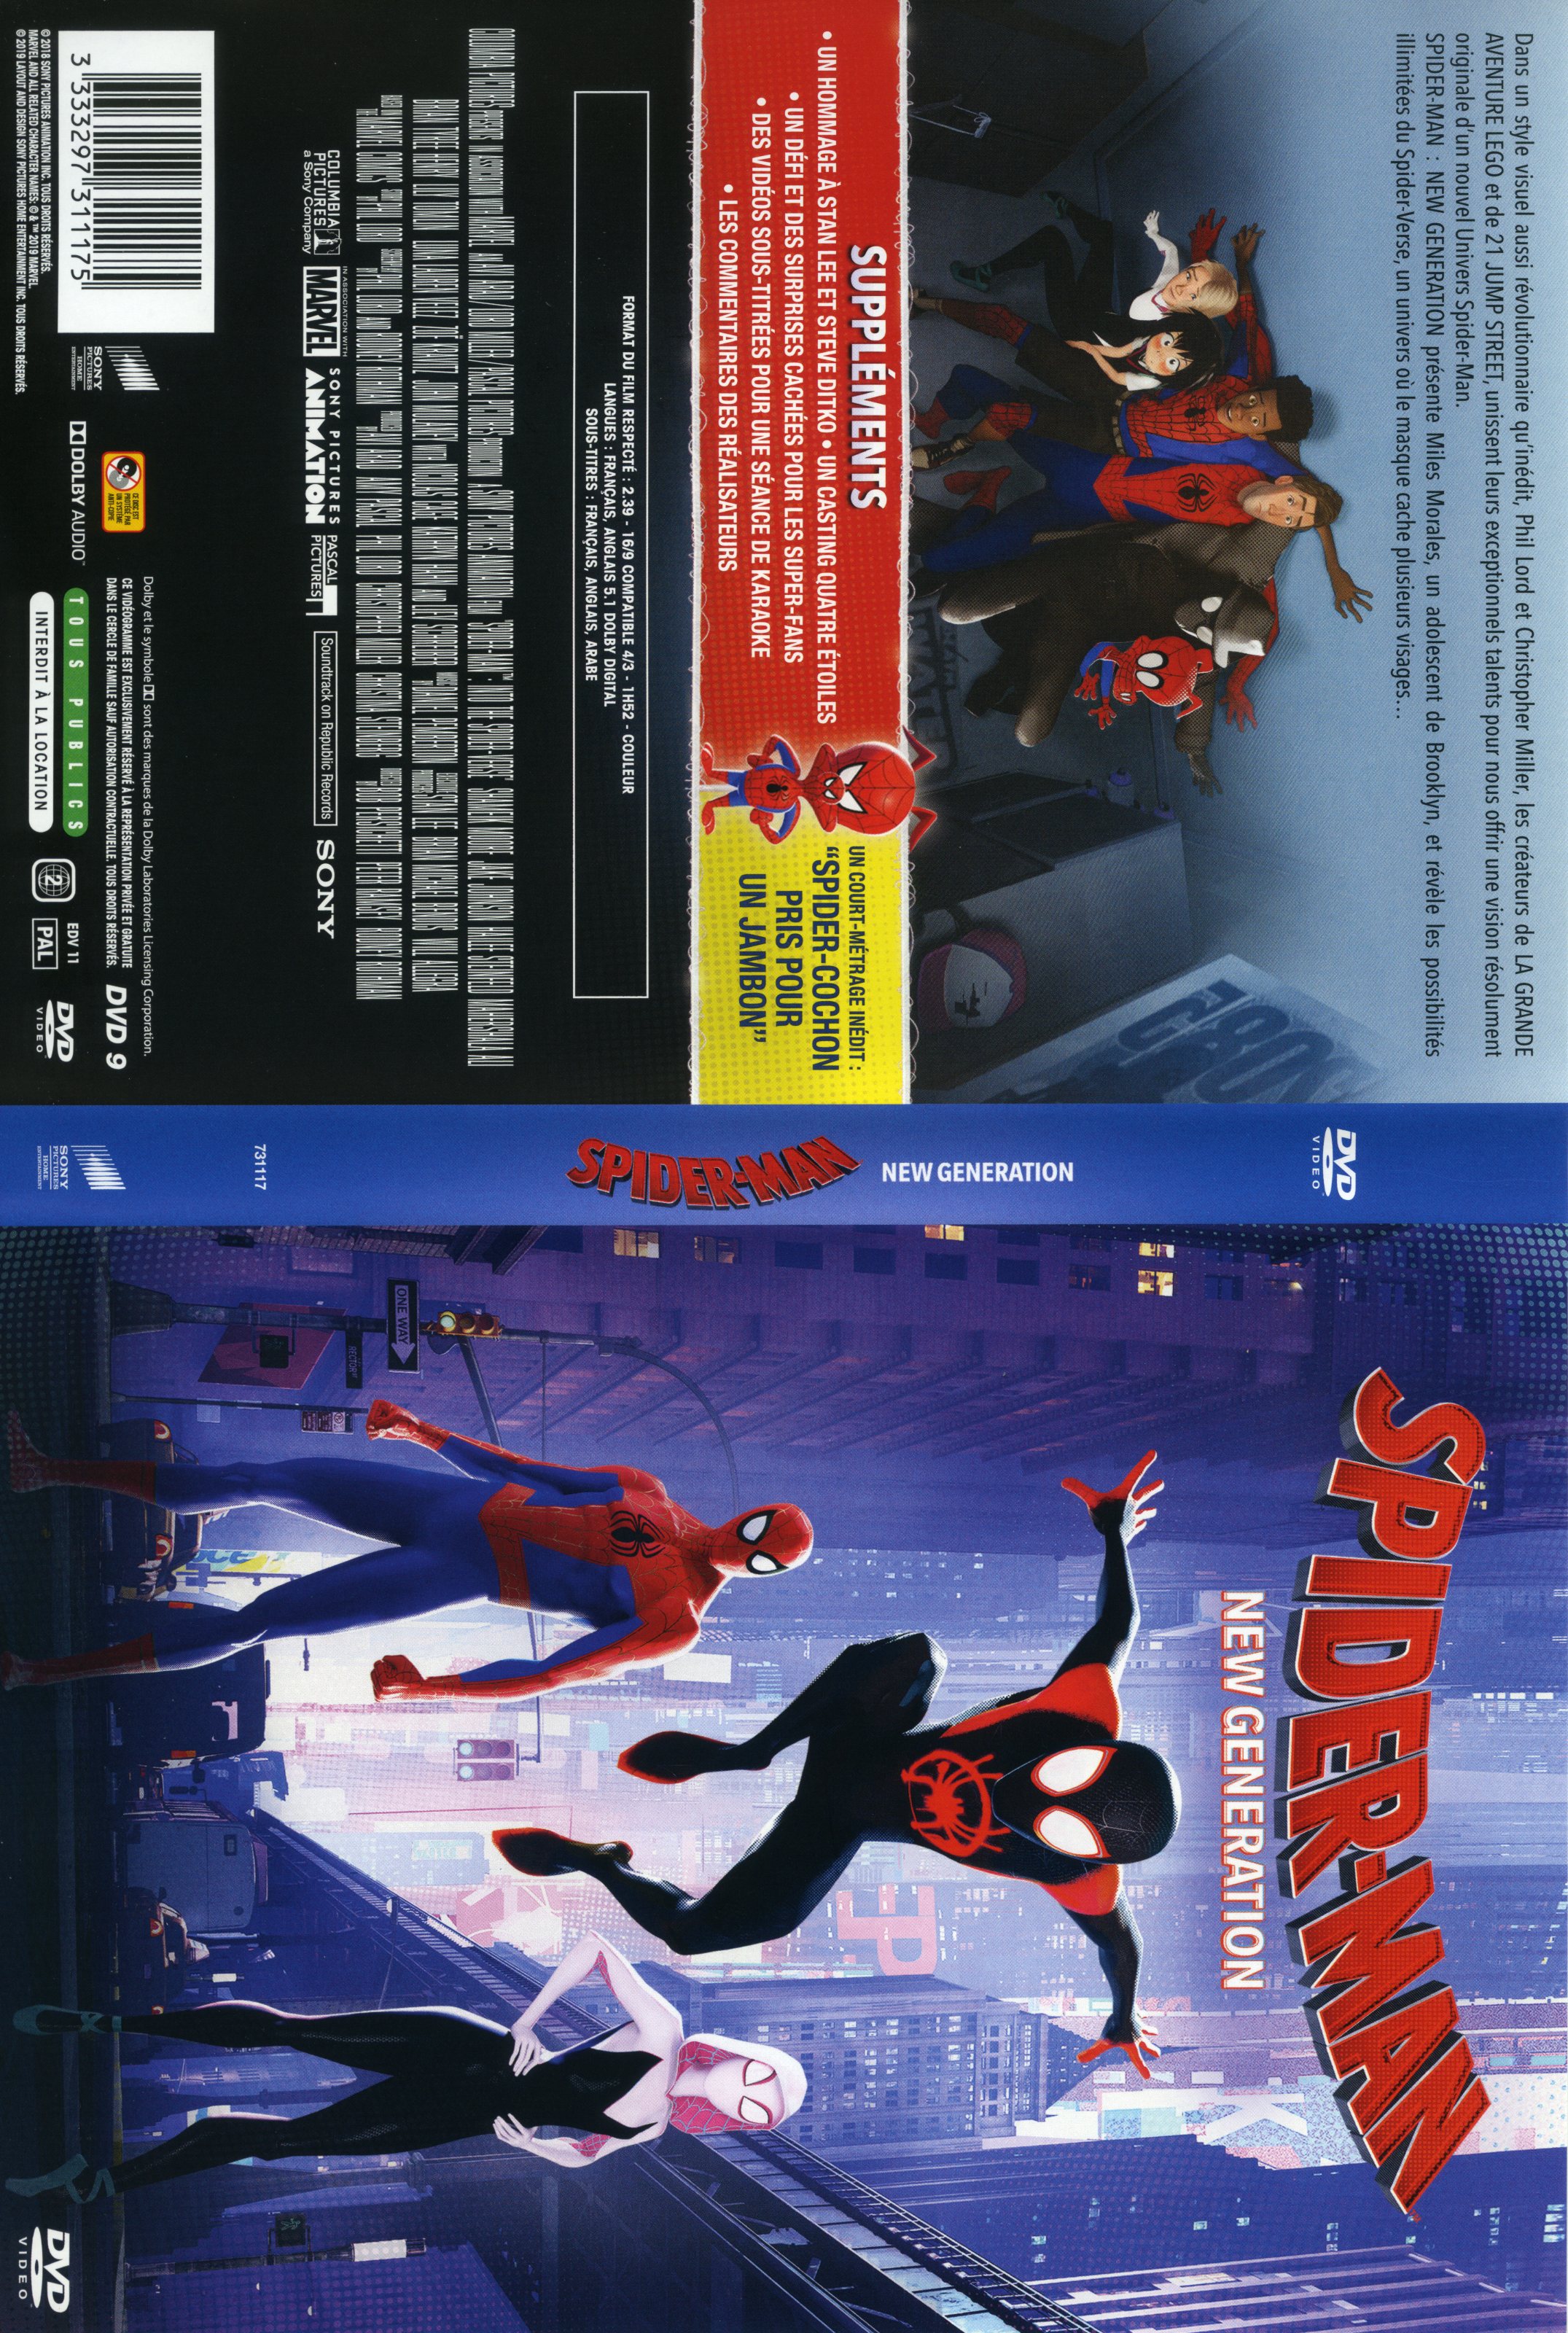 Jaquette DVD Spider-man New Generation